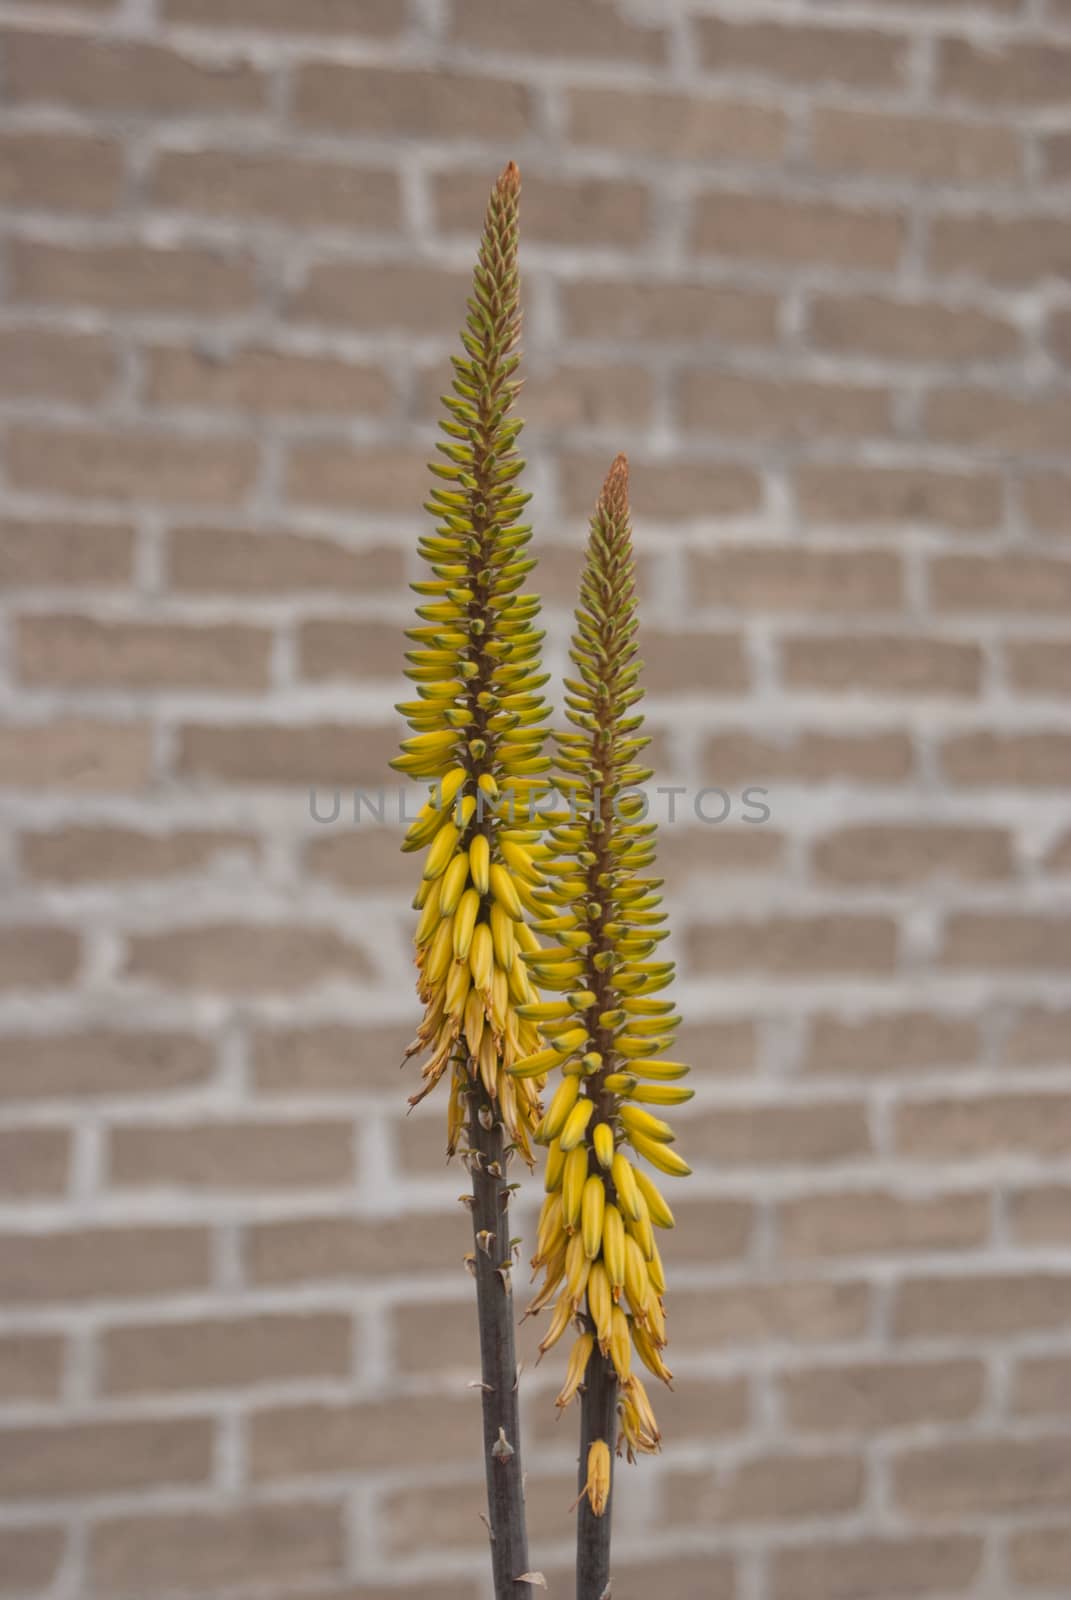 Tall yellow banana-like flowers on a brick wall